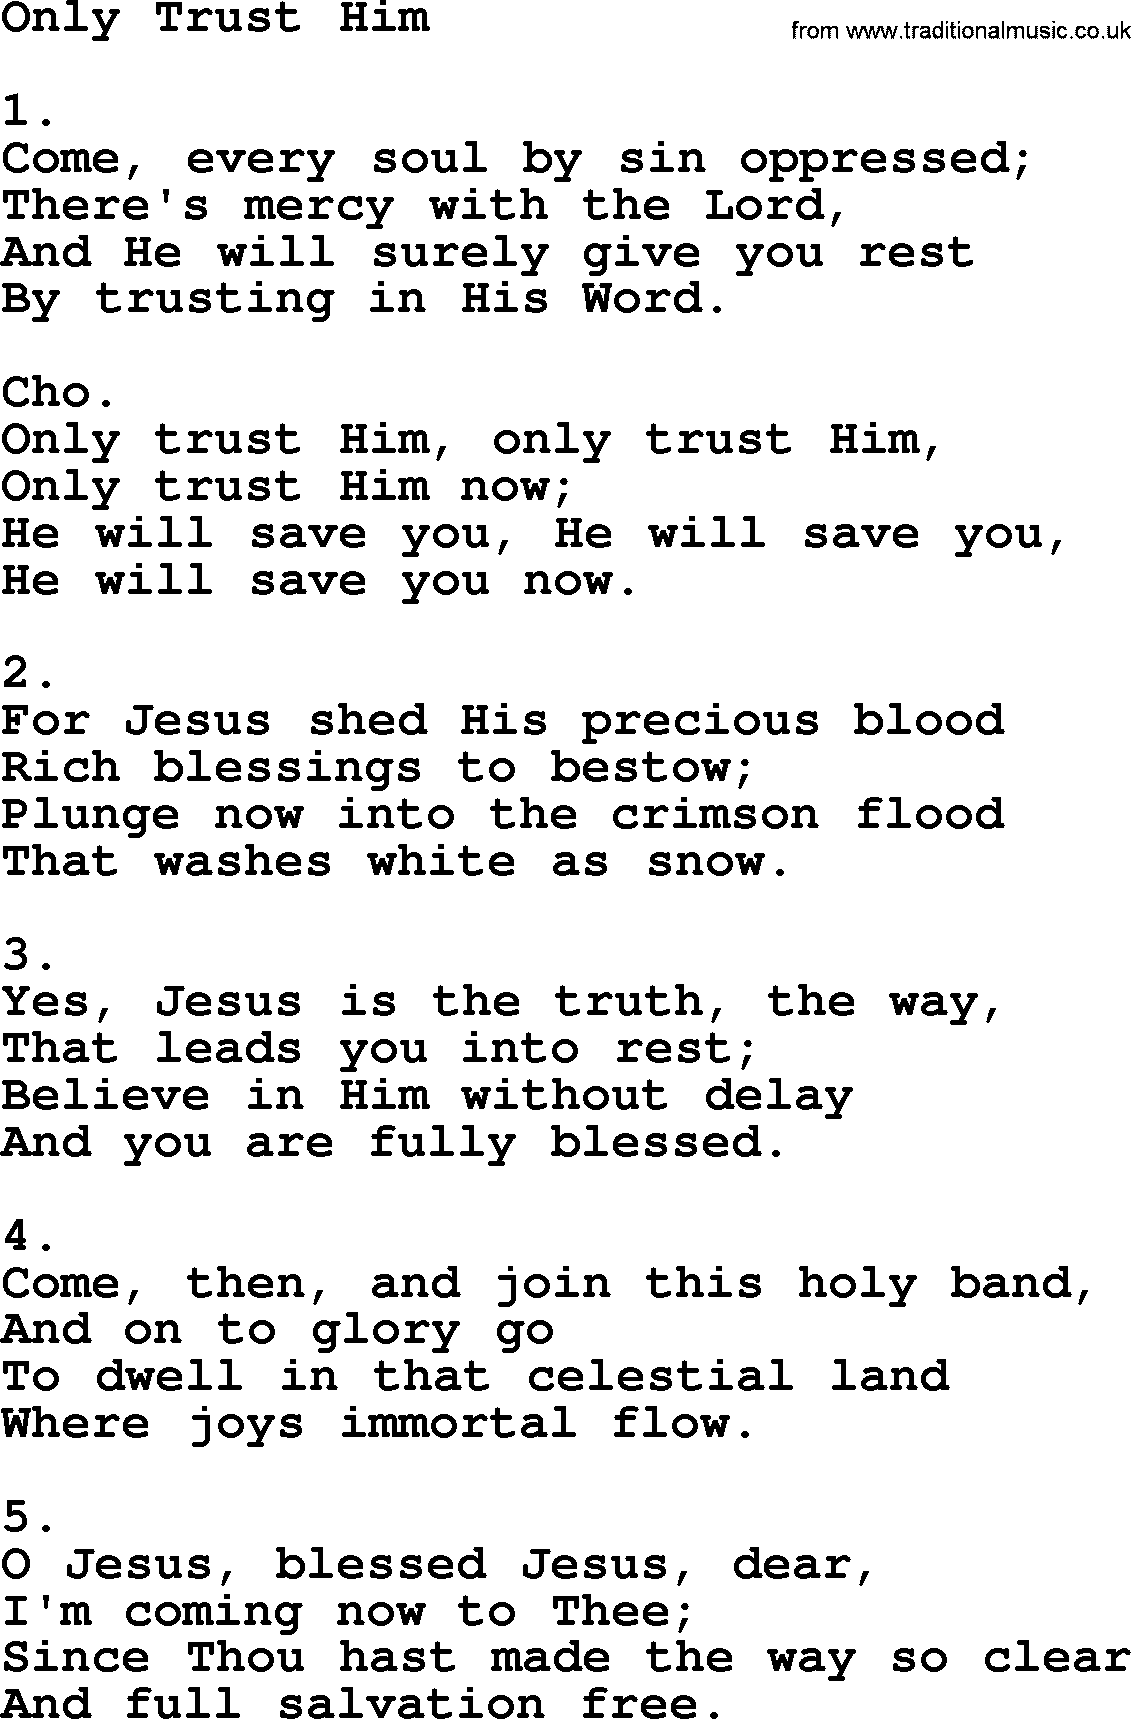 Apostolic & Pentecostal Hymns and Songs, Hymn: Only Trust Him lyrics and PDF